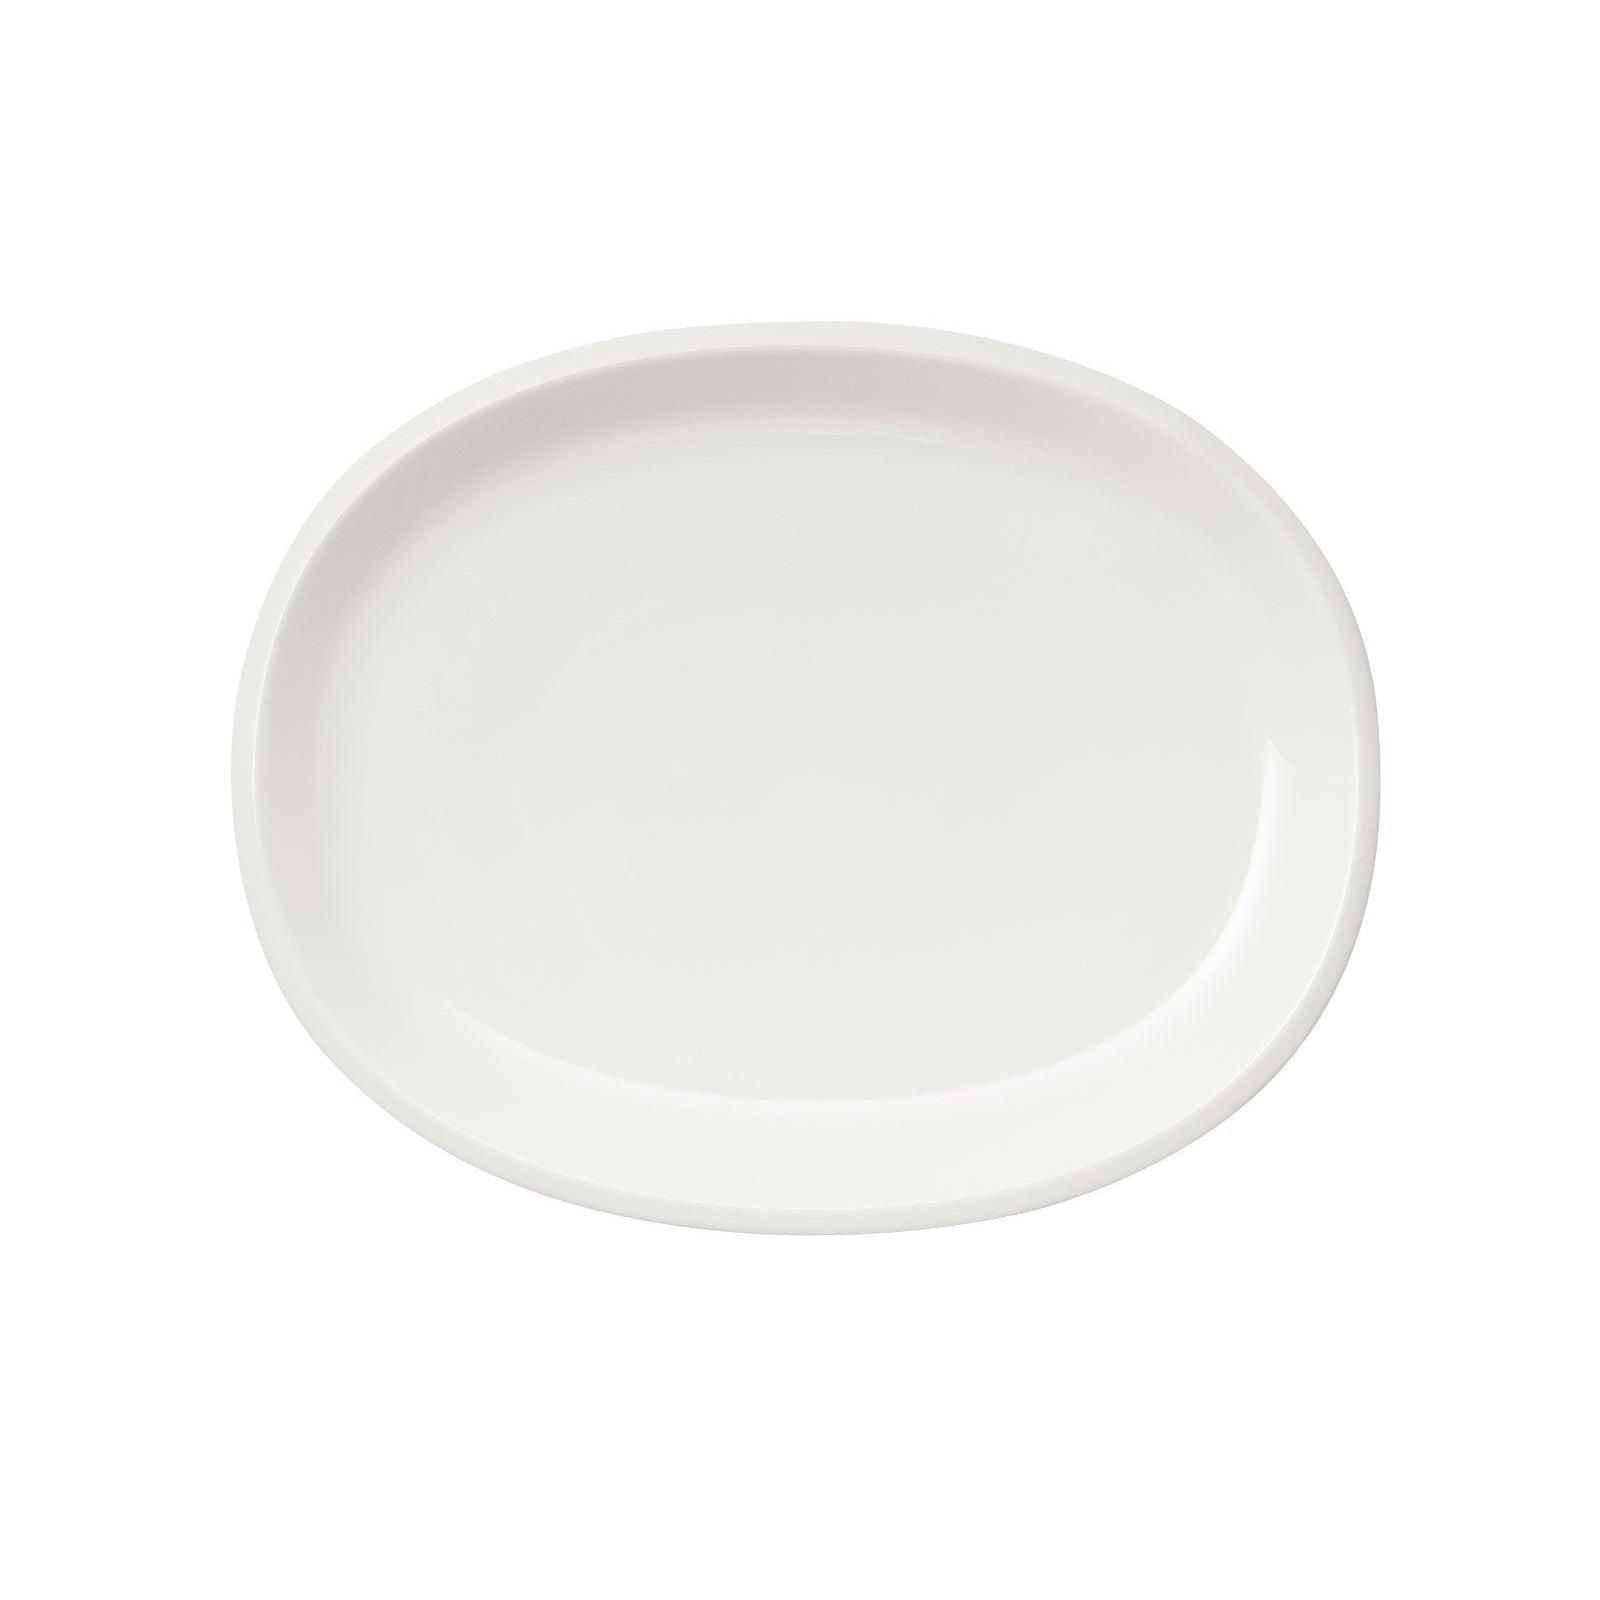 Iittala Raami Servingplatte weiß, 35 cm